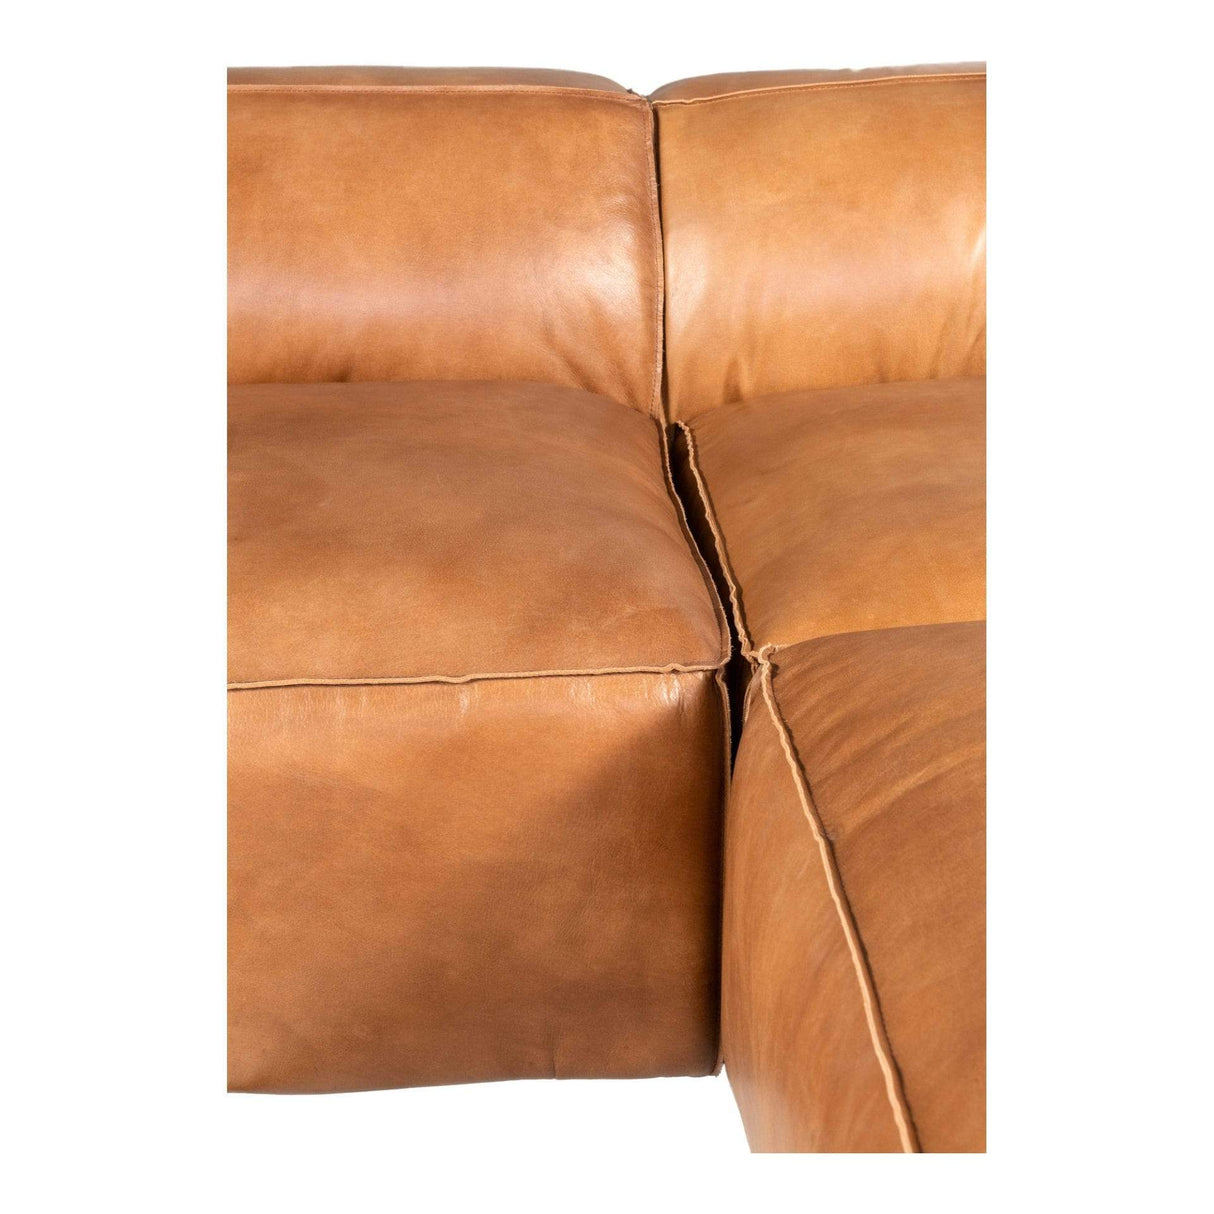 BLU Home Luxe Dream Modular Sectional Furniture